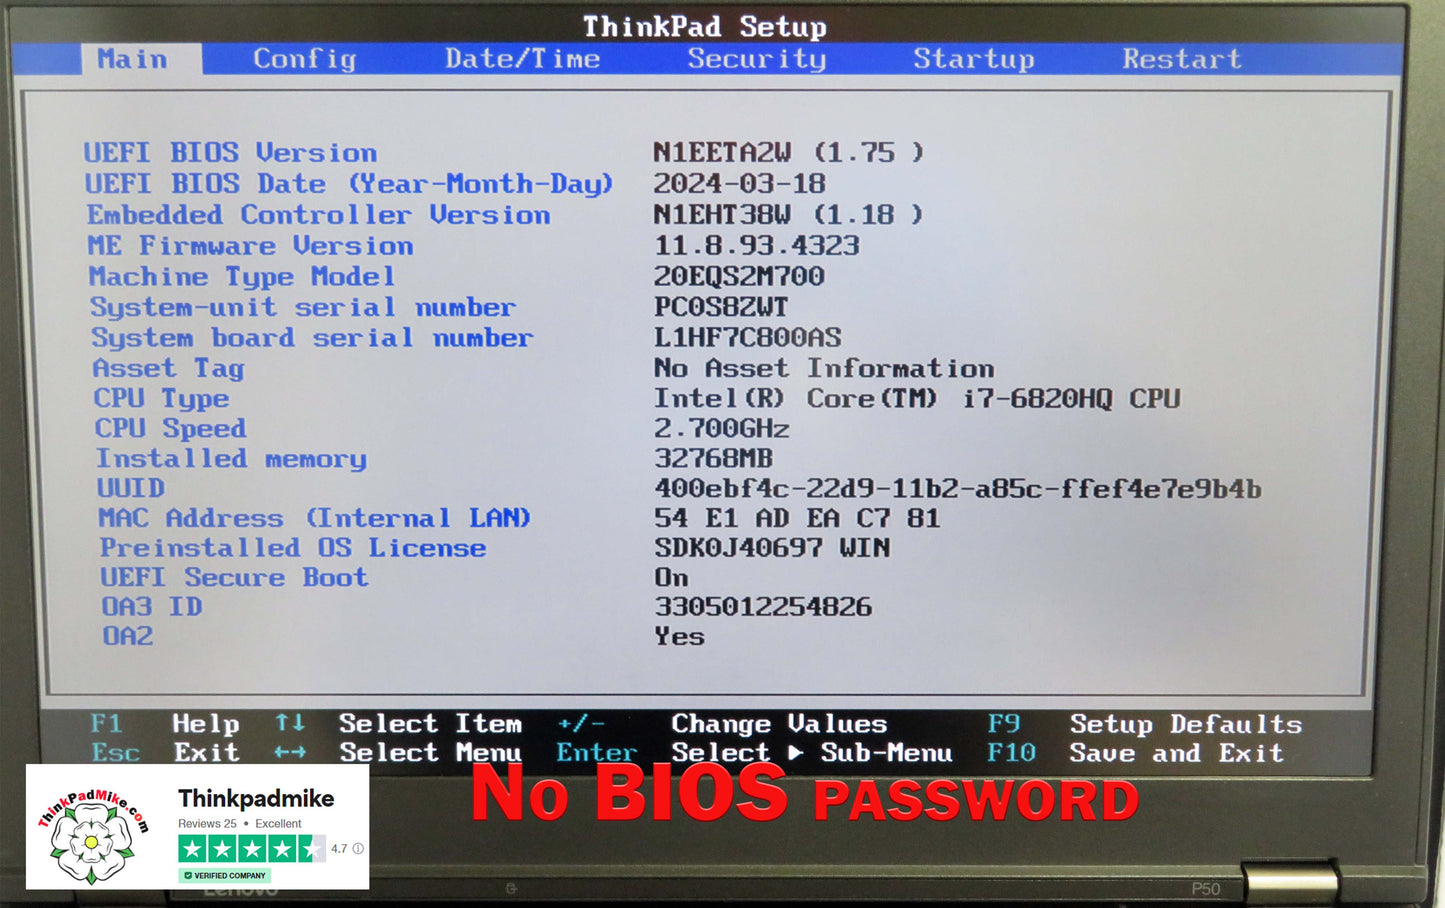 Lenovo ThinkPad P50 i7 6820HQ 32GB RAM 512GB SSD + 500GB HDD IPS NVIDIA (991)